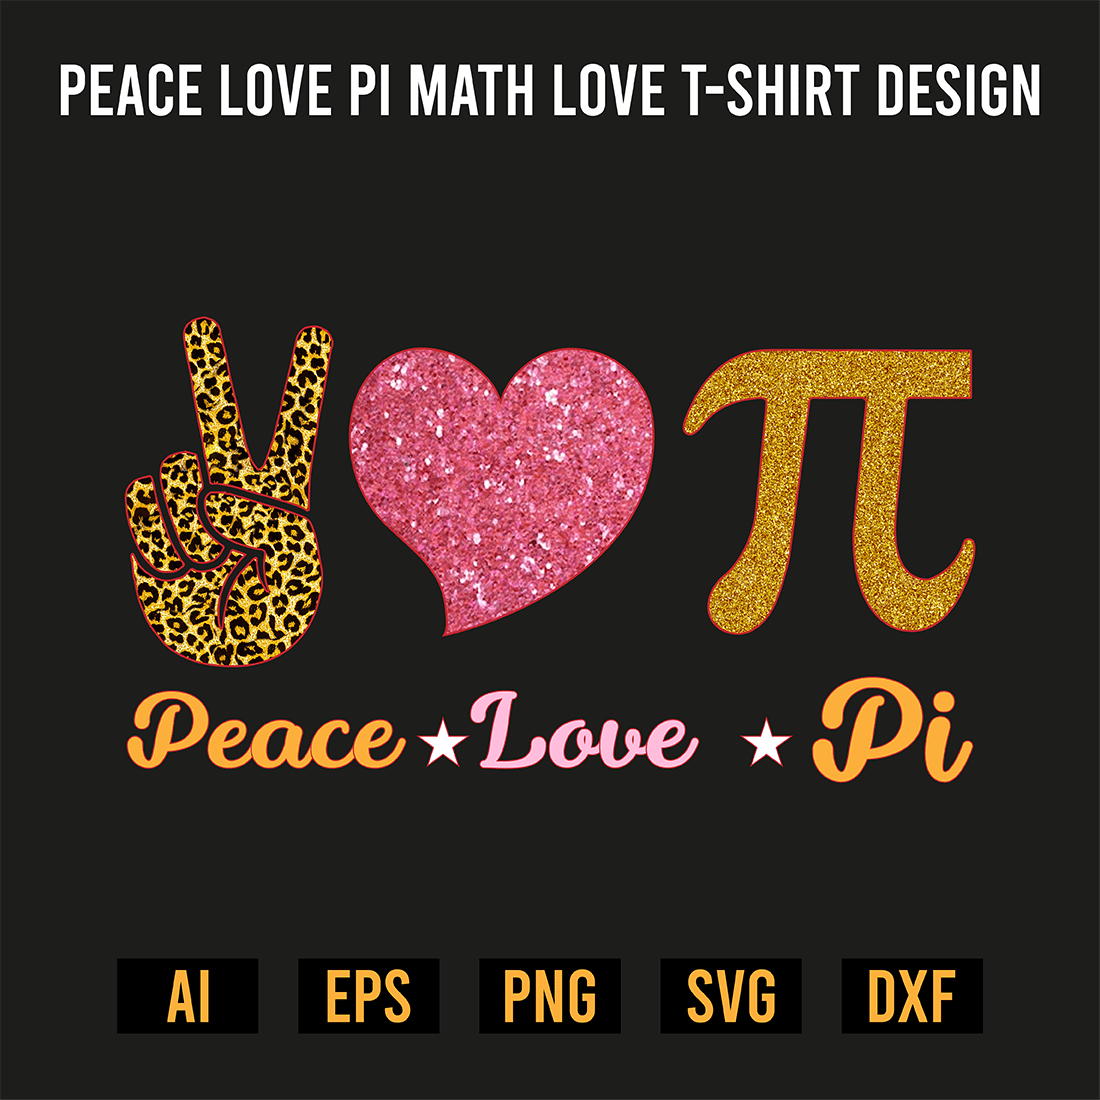 Peace Love Pi Math Love T-Shirt Design preview image.